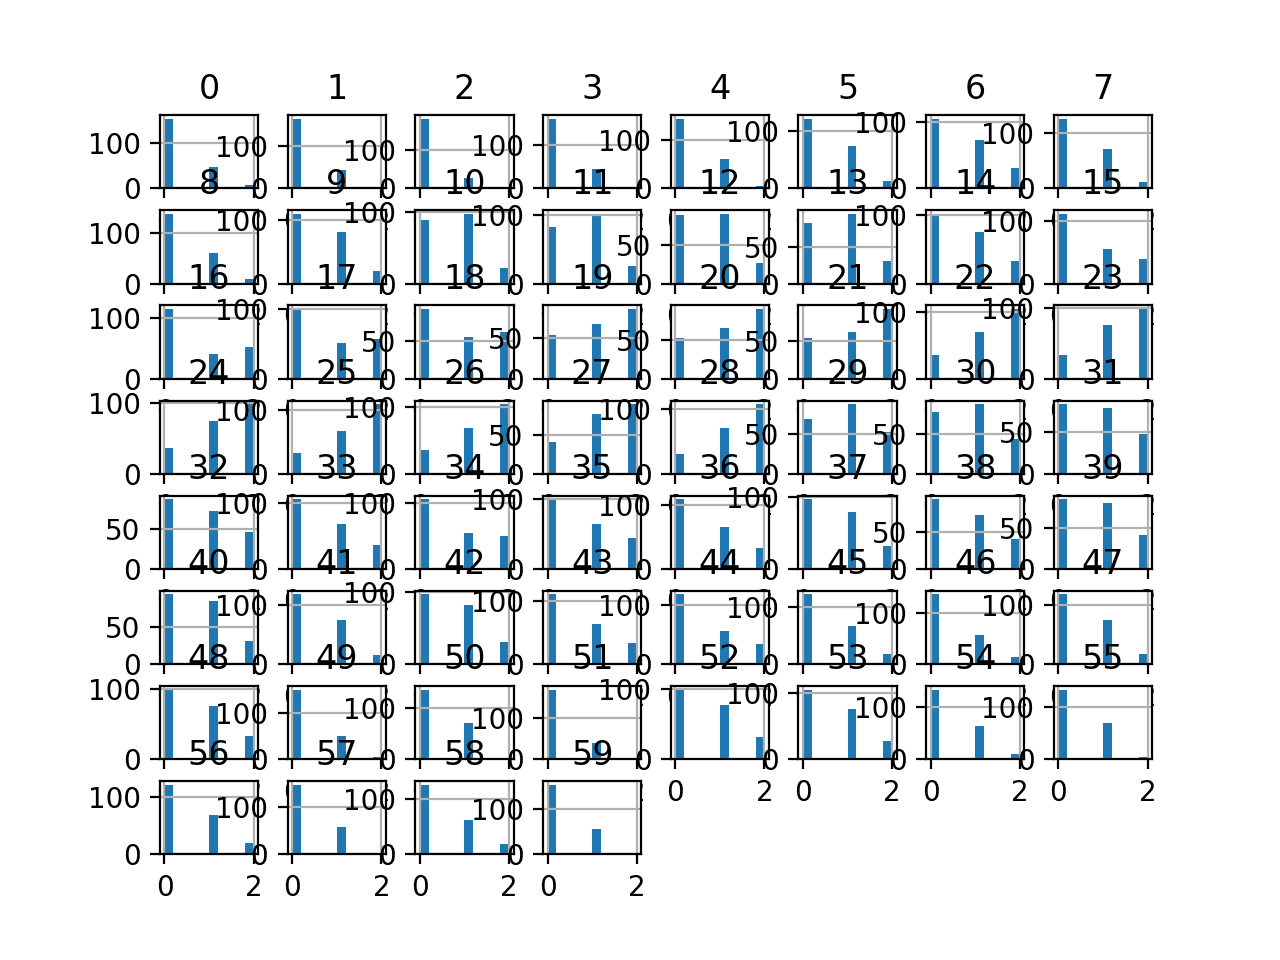 Histogram Plots of K-means Discretization Transformed Input Variables for the Sonar Dataset